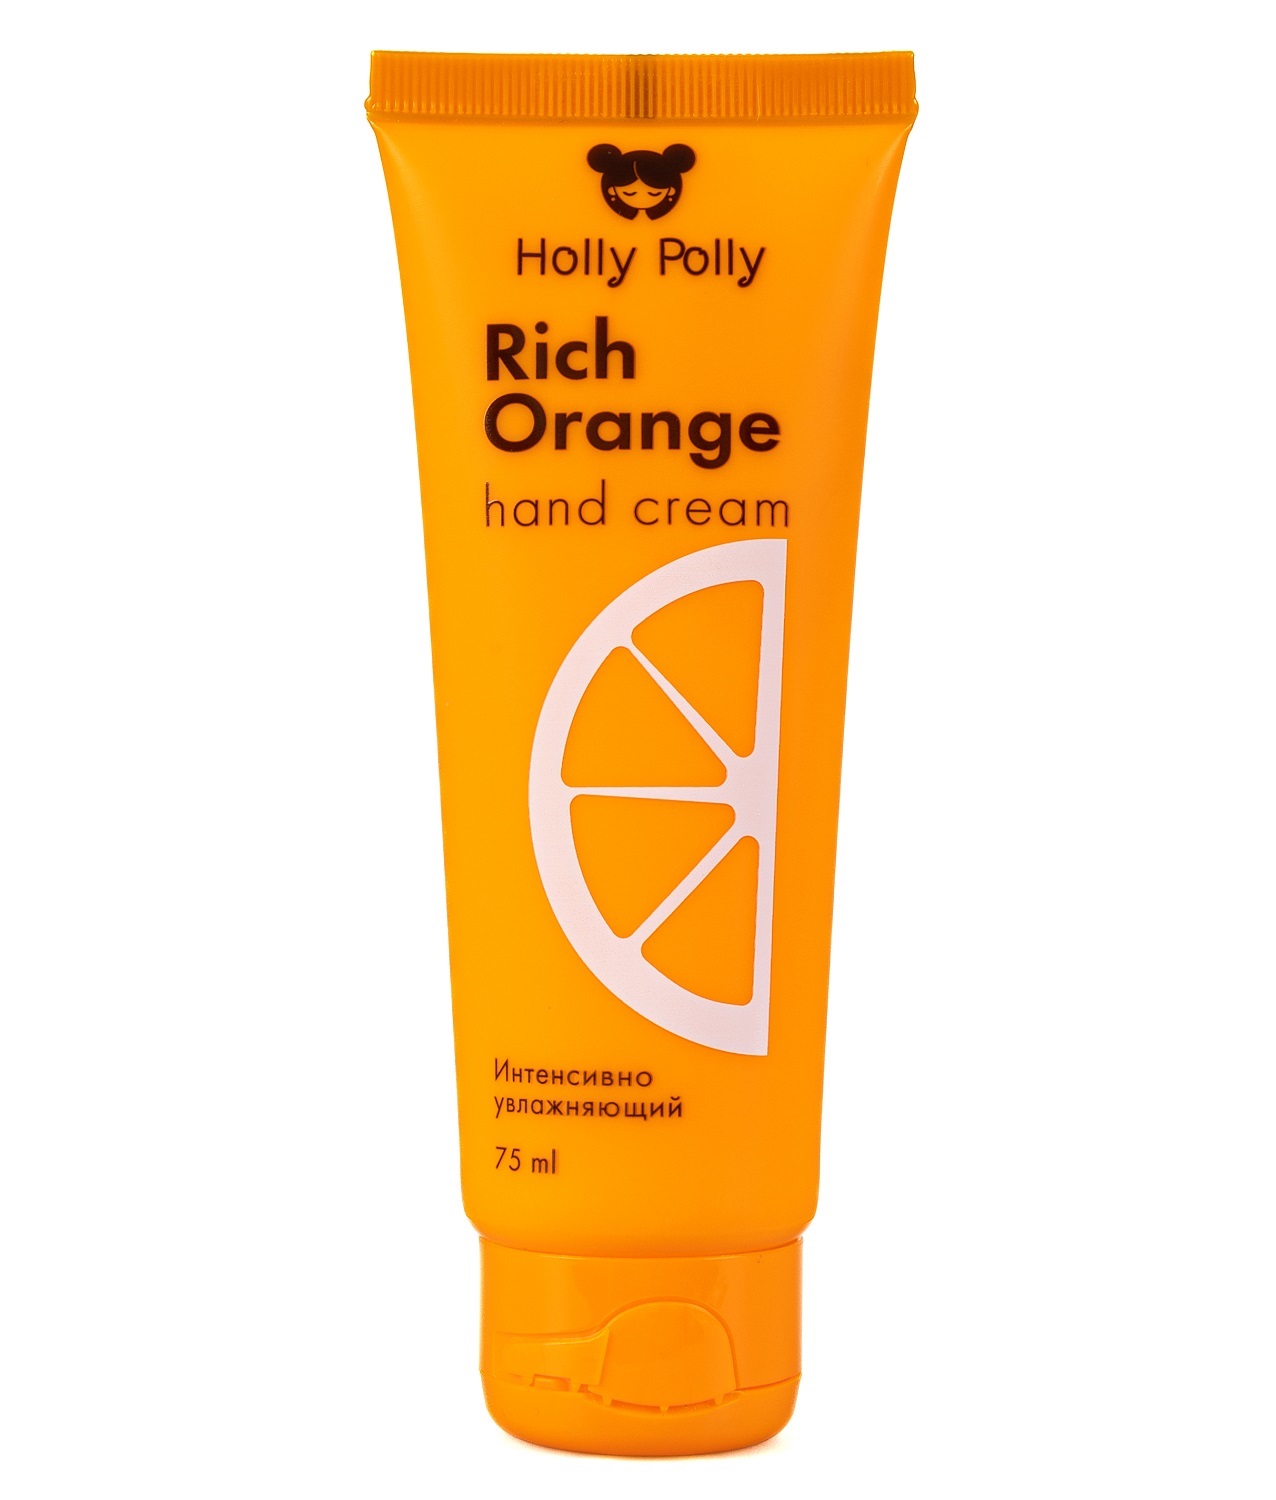 Holly Polly Увлажняющий крем для рук Rich Orange, 75 мл (Holly Polly, Foot & Hands)